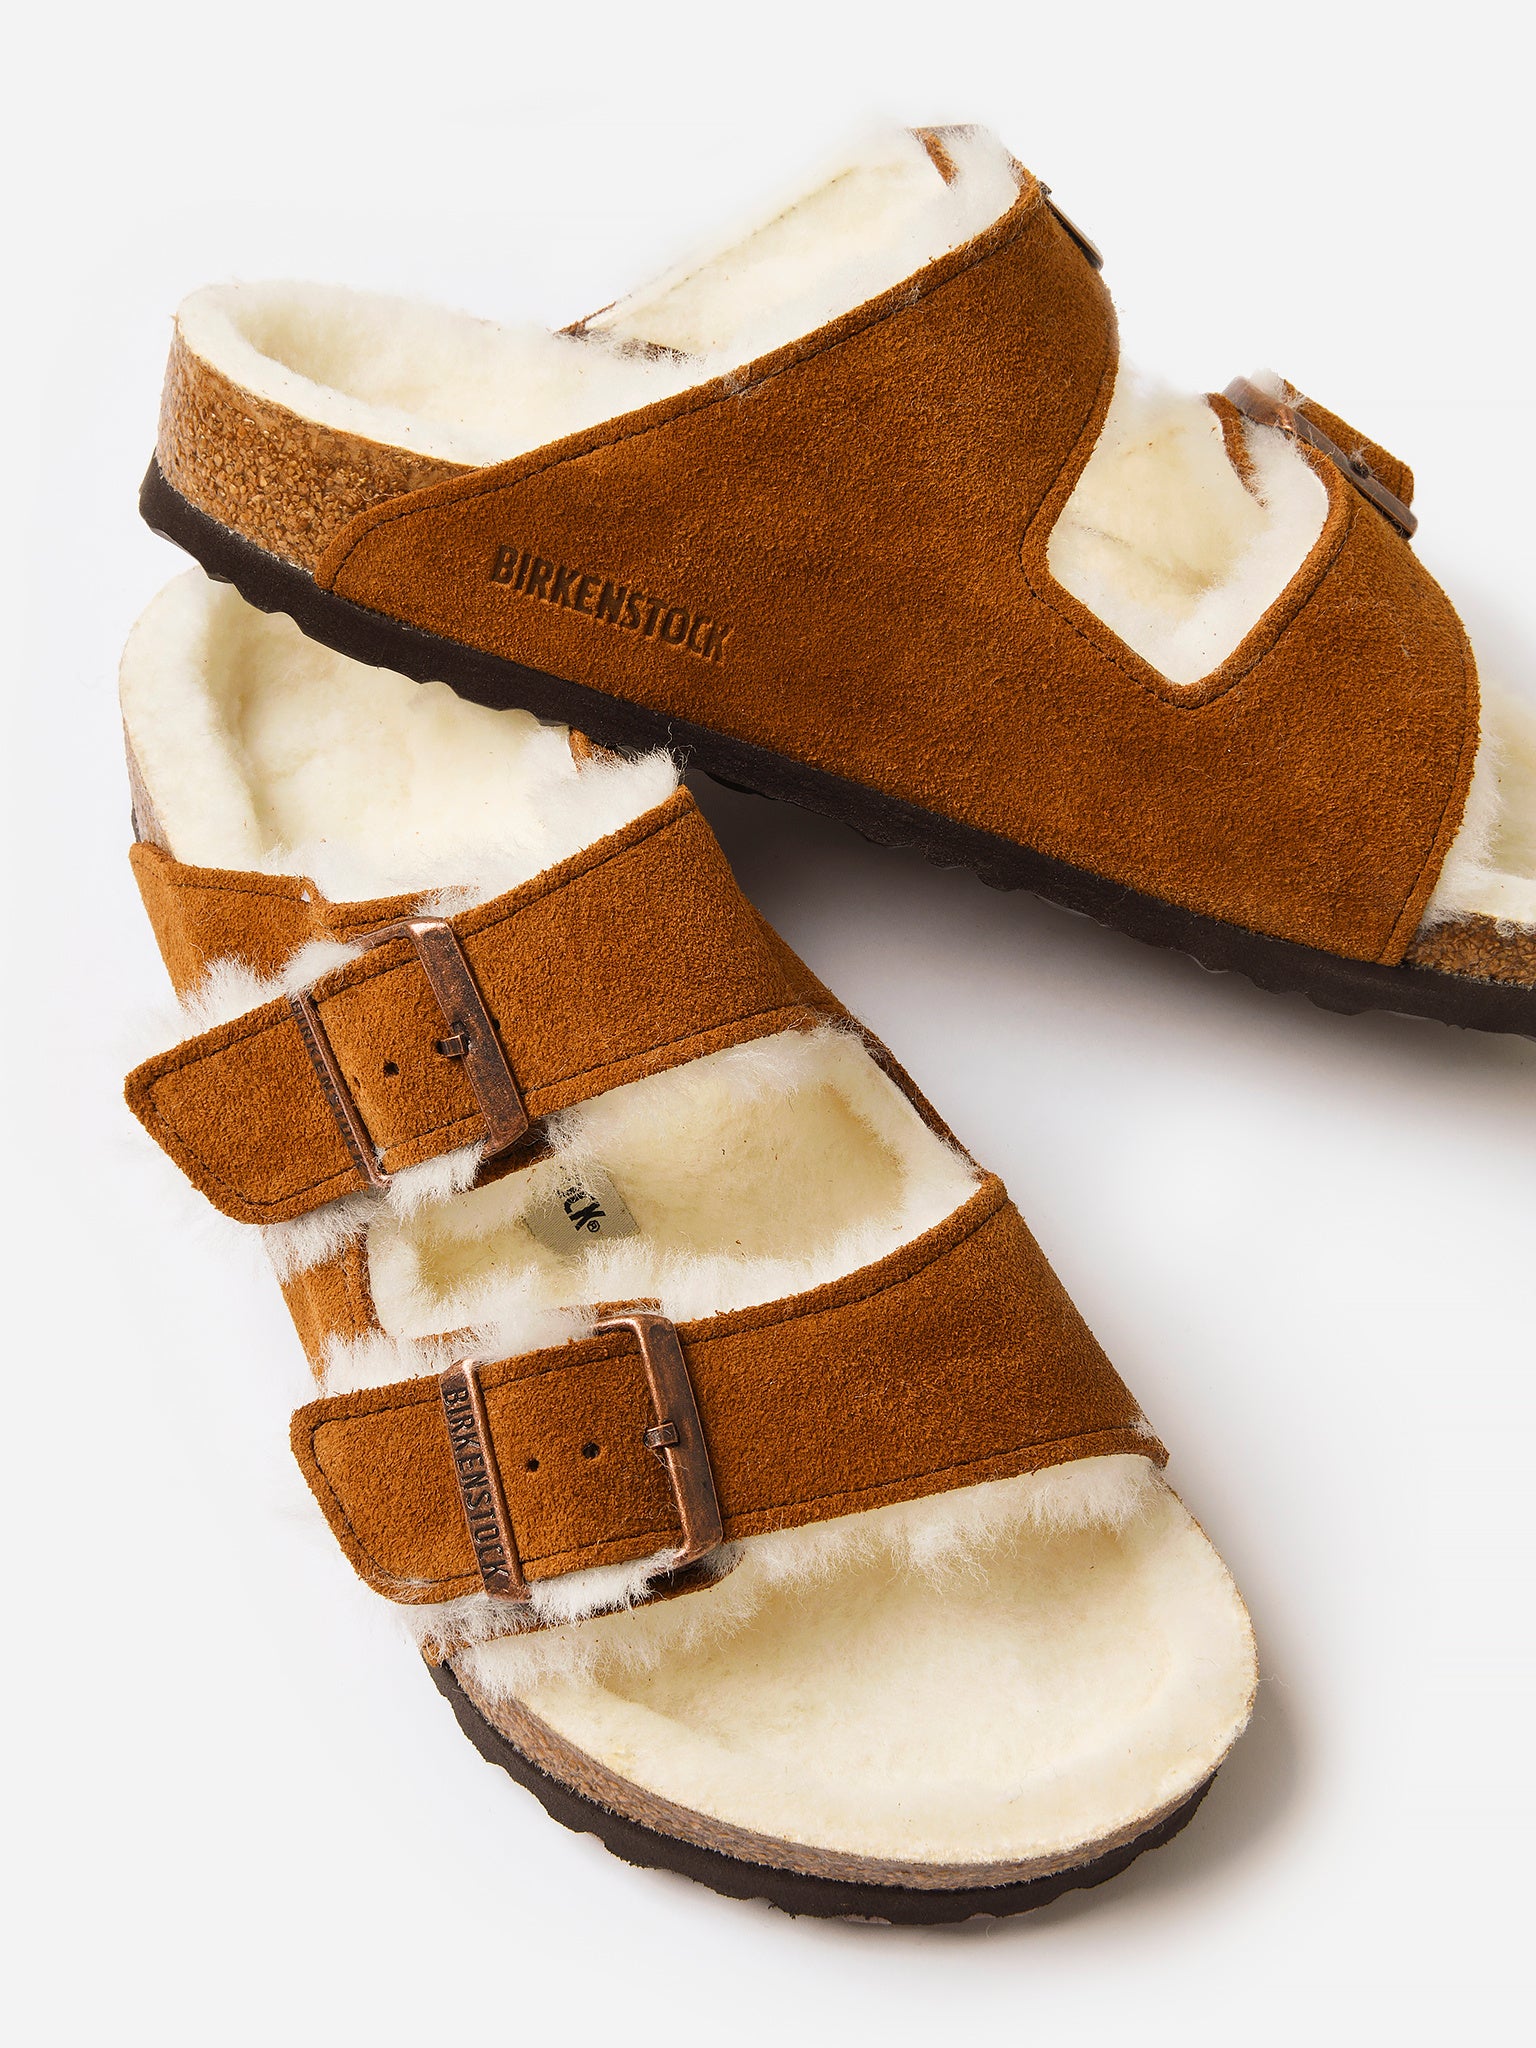 BIRKENSTOCK, Arizona Shearling Leather Sandals, Women